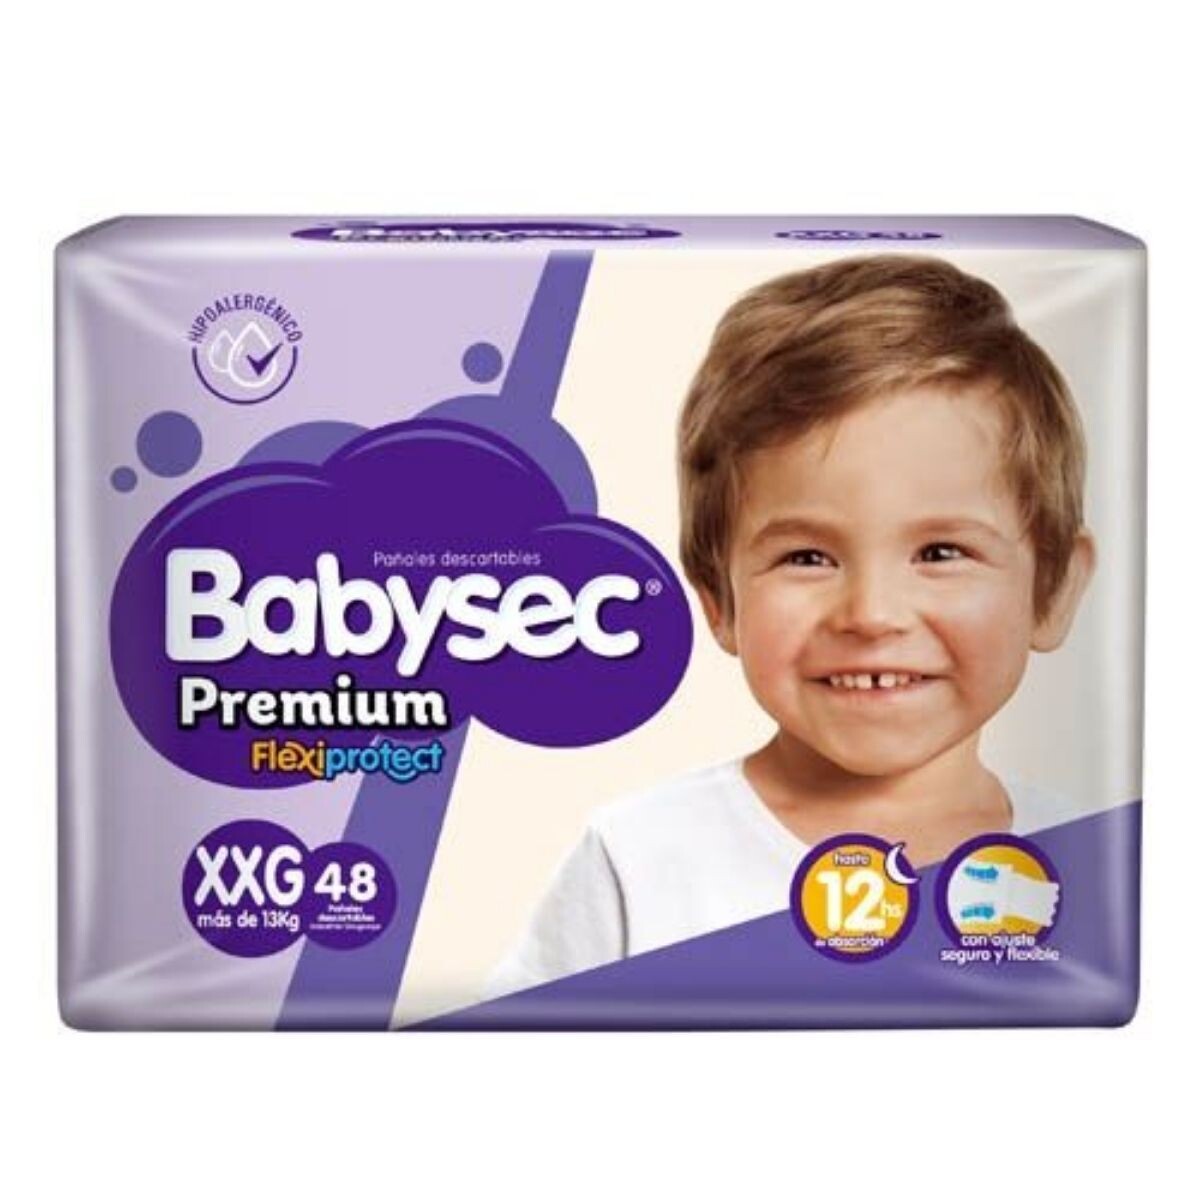 Pañales Babysec Premium Flexiprotect XXG - X48 